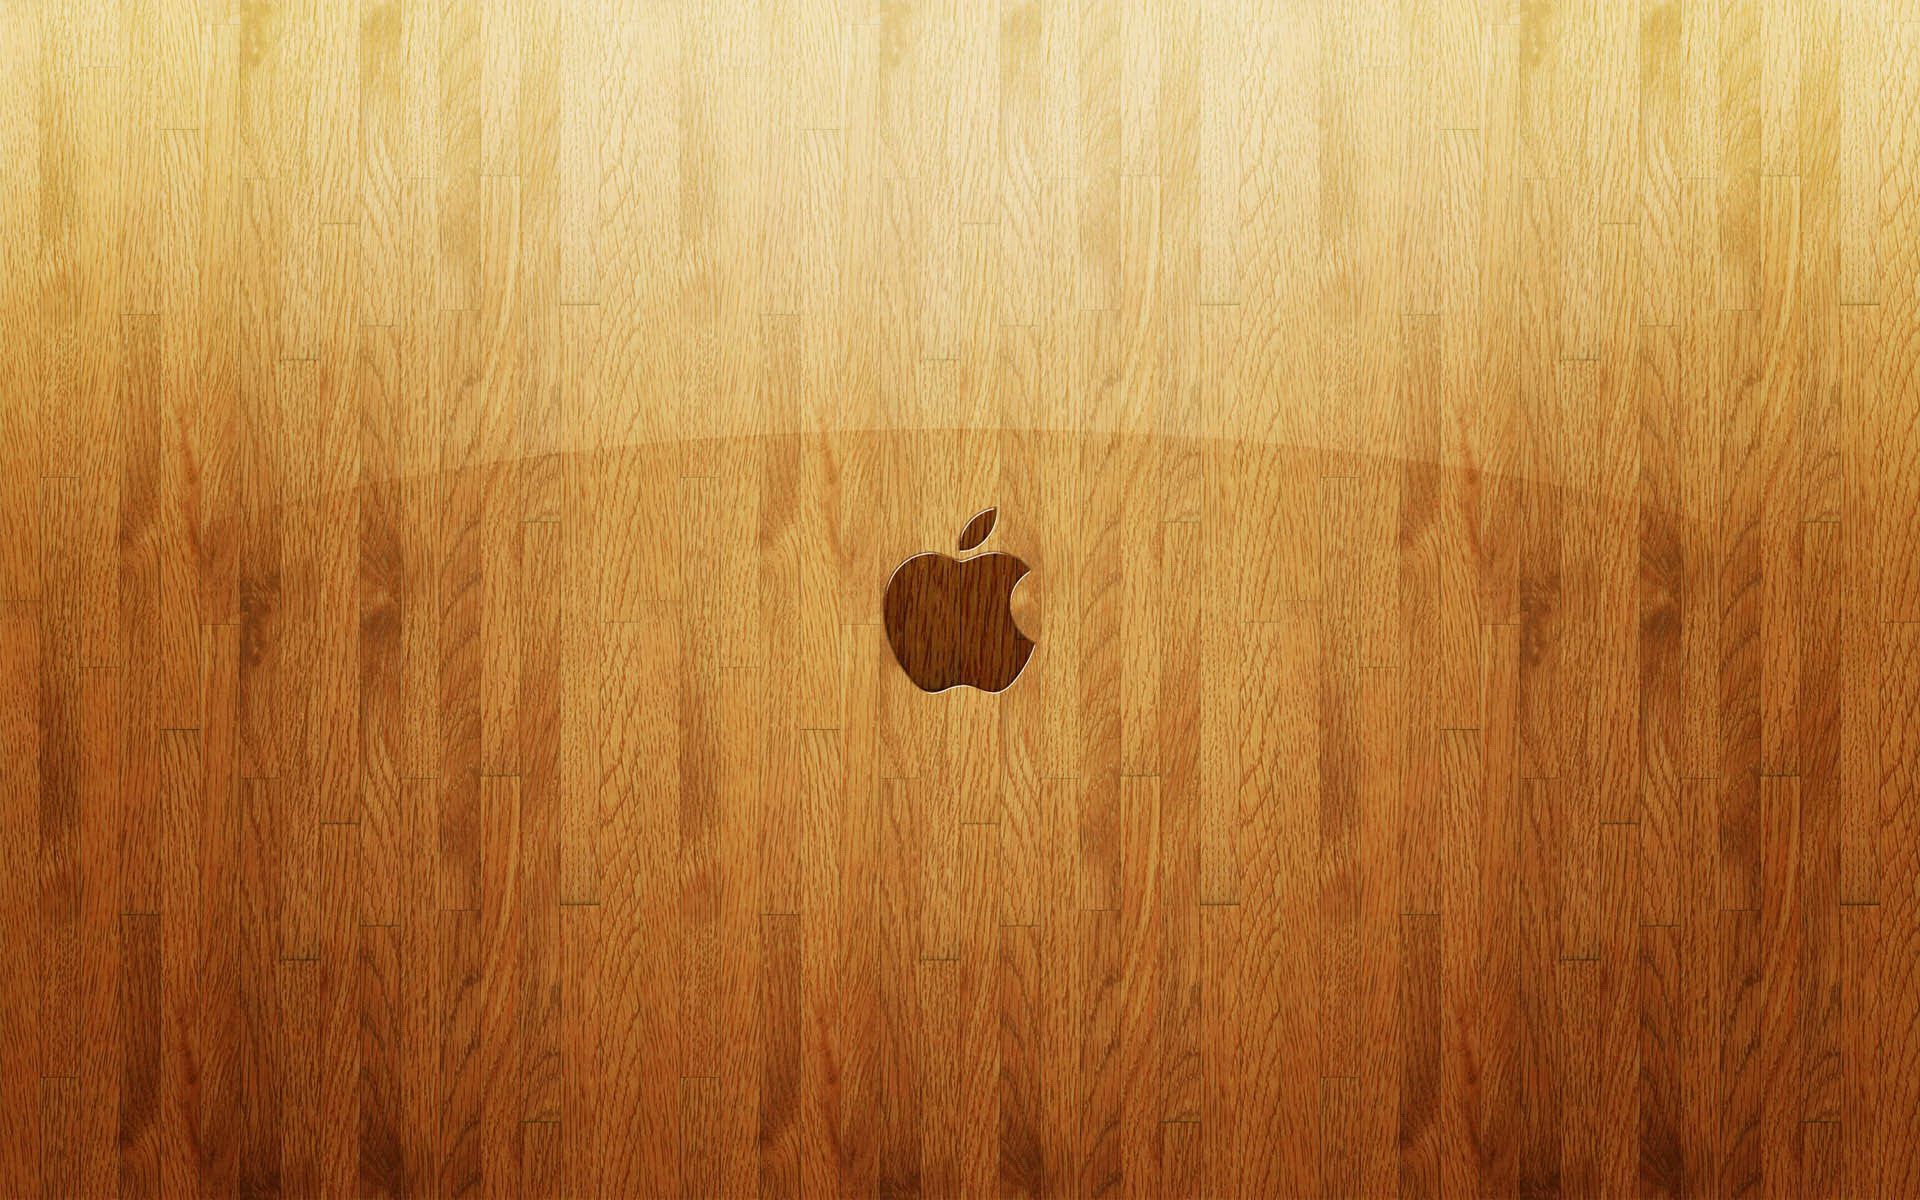 Apple on light wood desktop wallpaper 1384